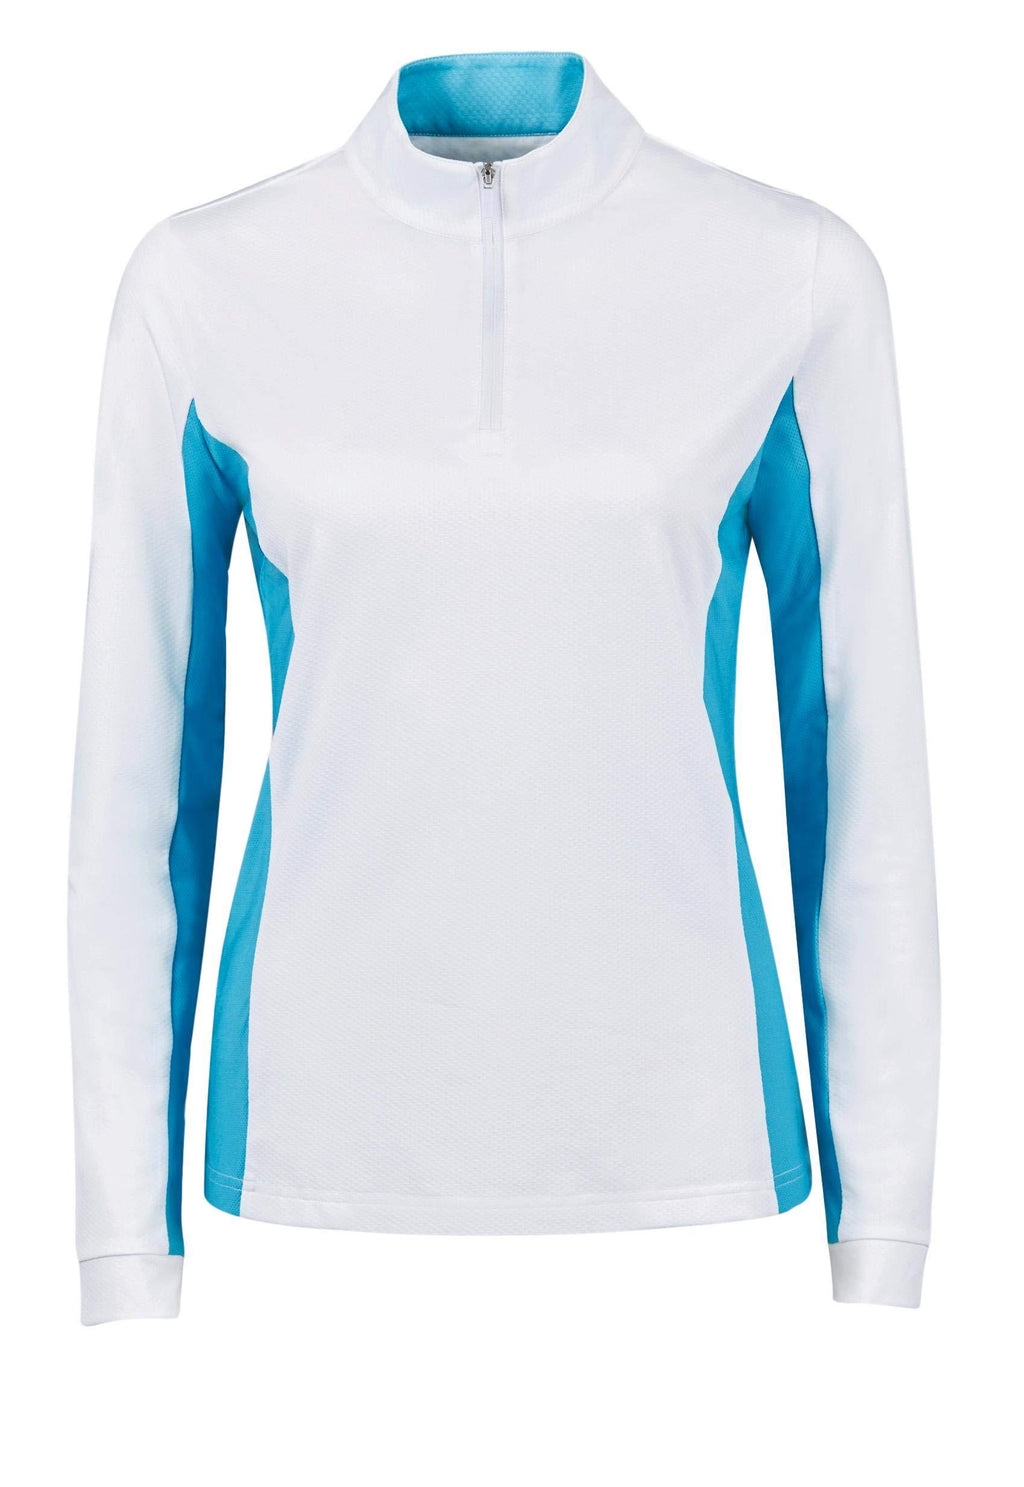 Dublin Airflow Comfort Dry (CDT) Long Sleeve Tech Top Riding Shirt (White/Aqua, XX-Large) - PawsPlanet Australia